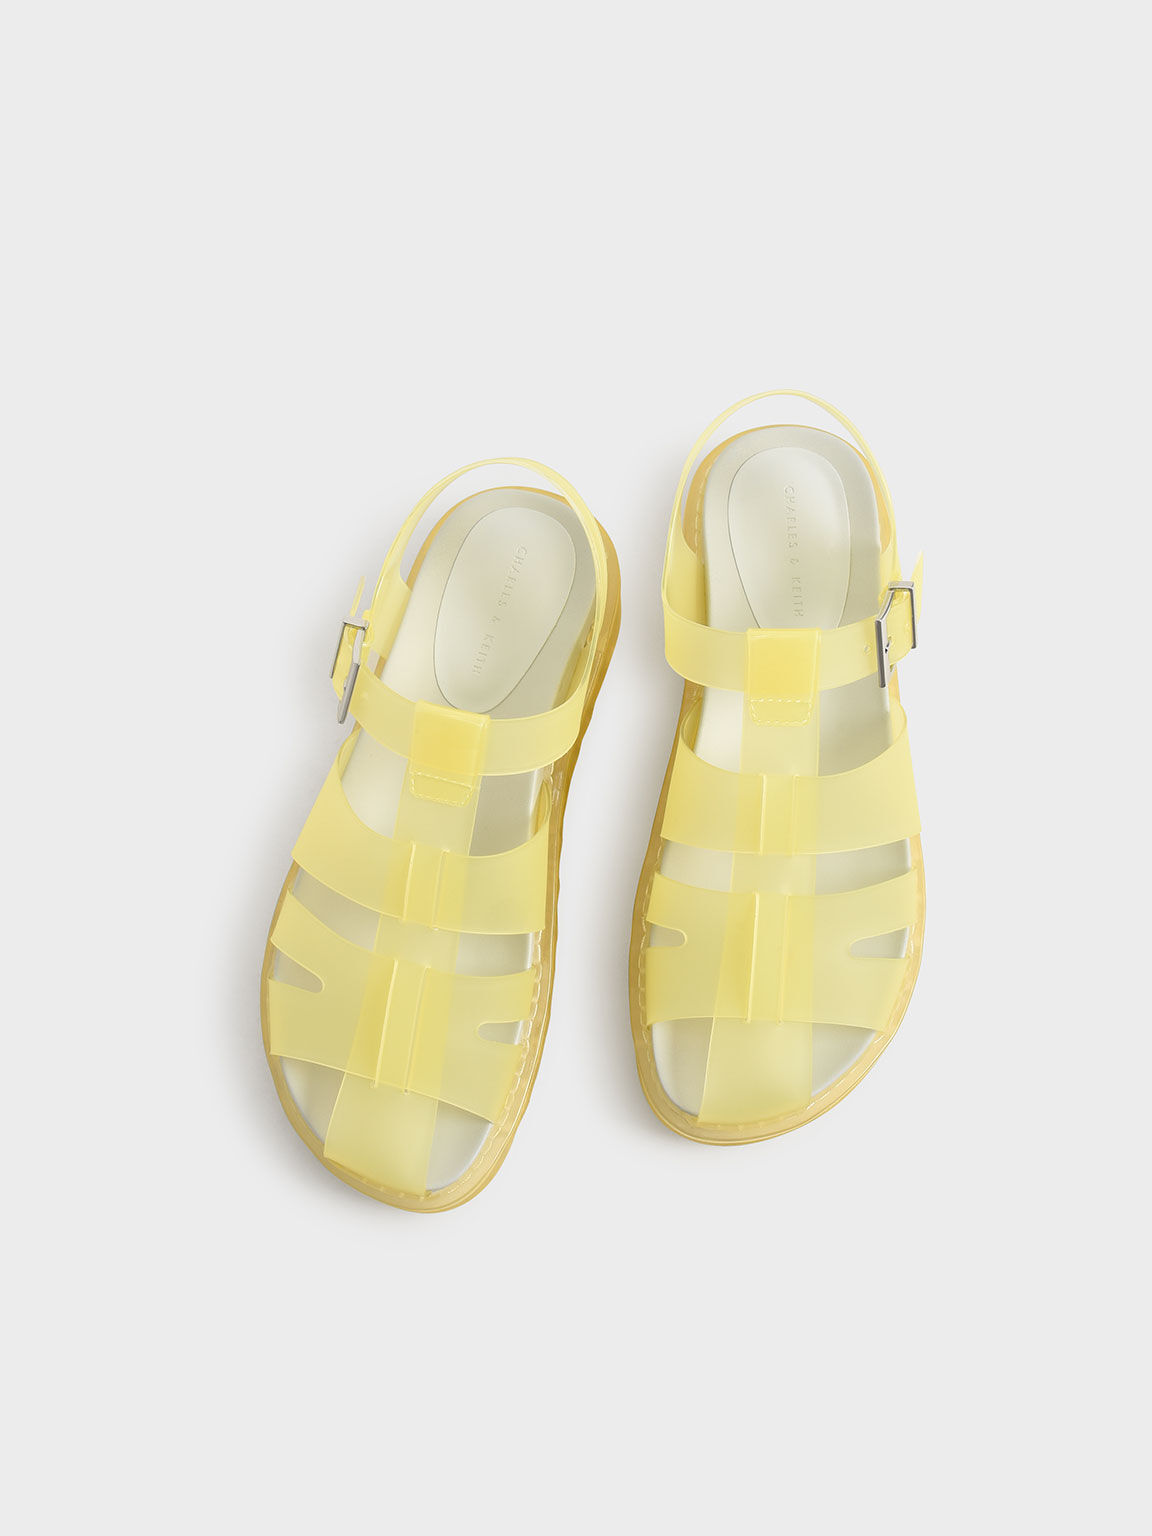 Translucent Caged Sandals, Yellow, hi-res